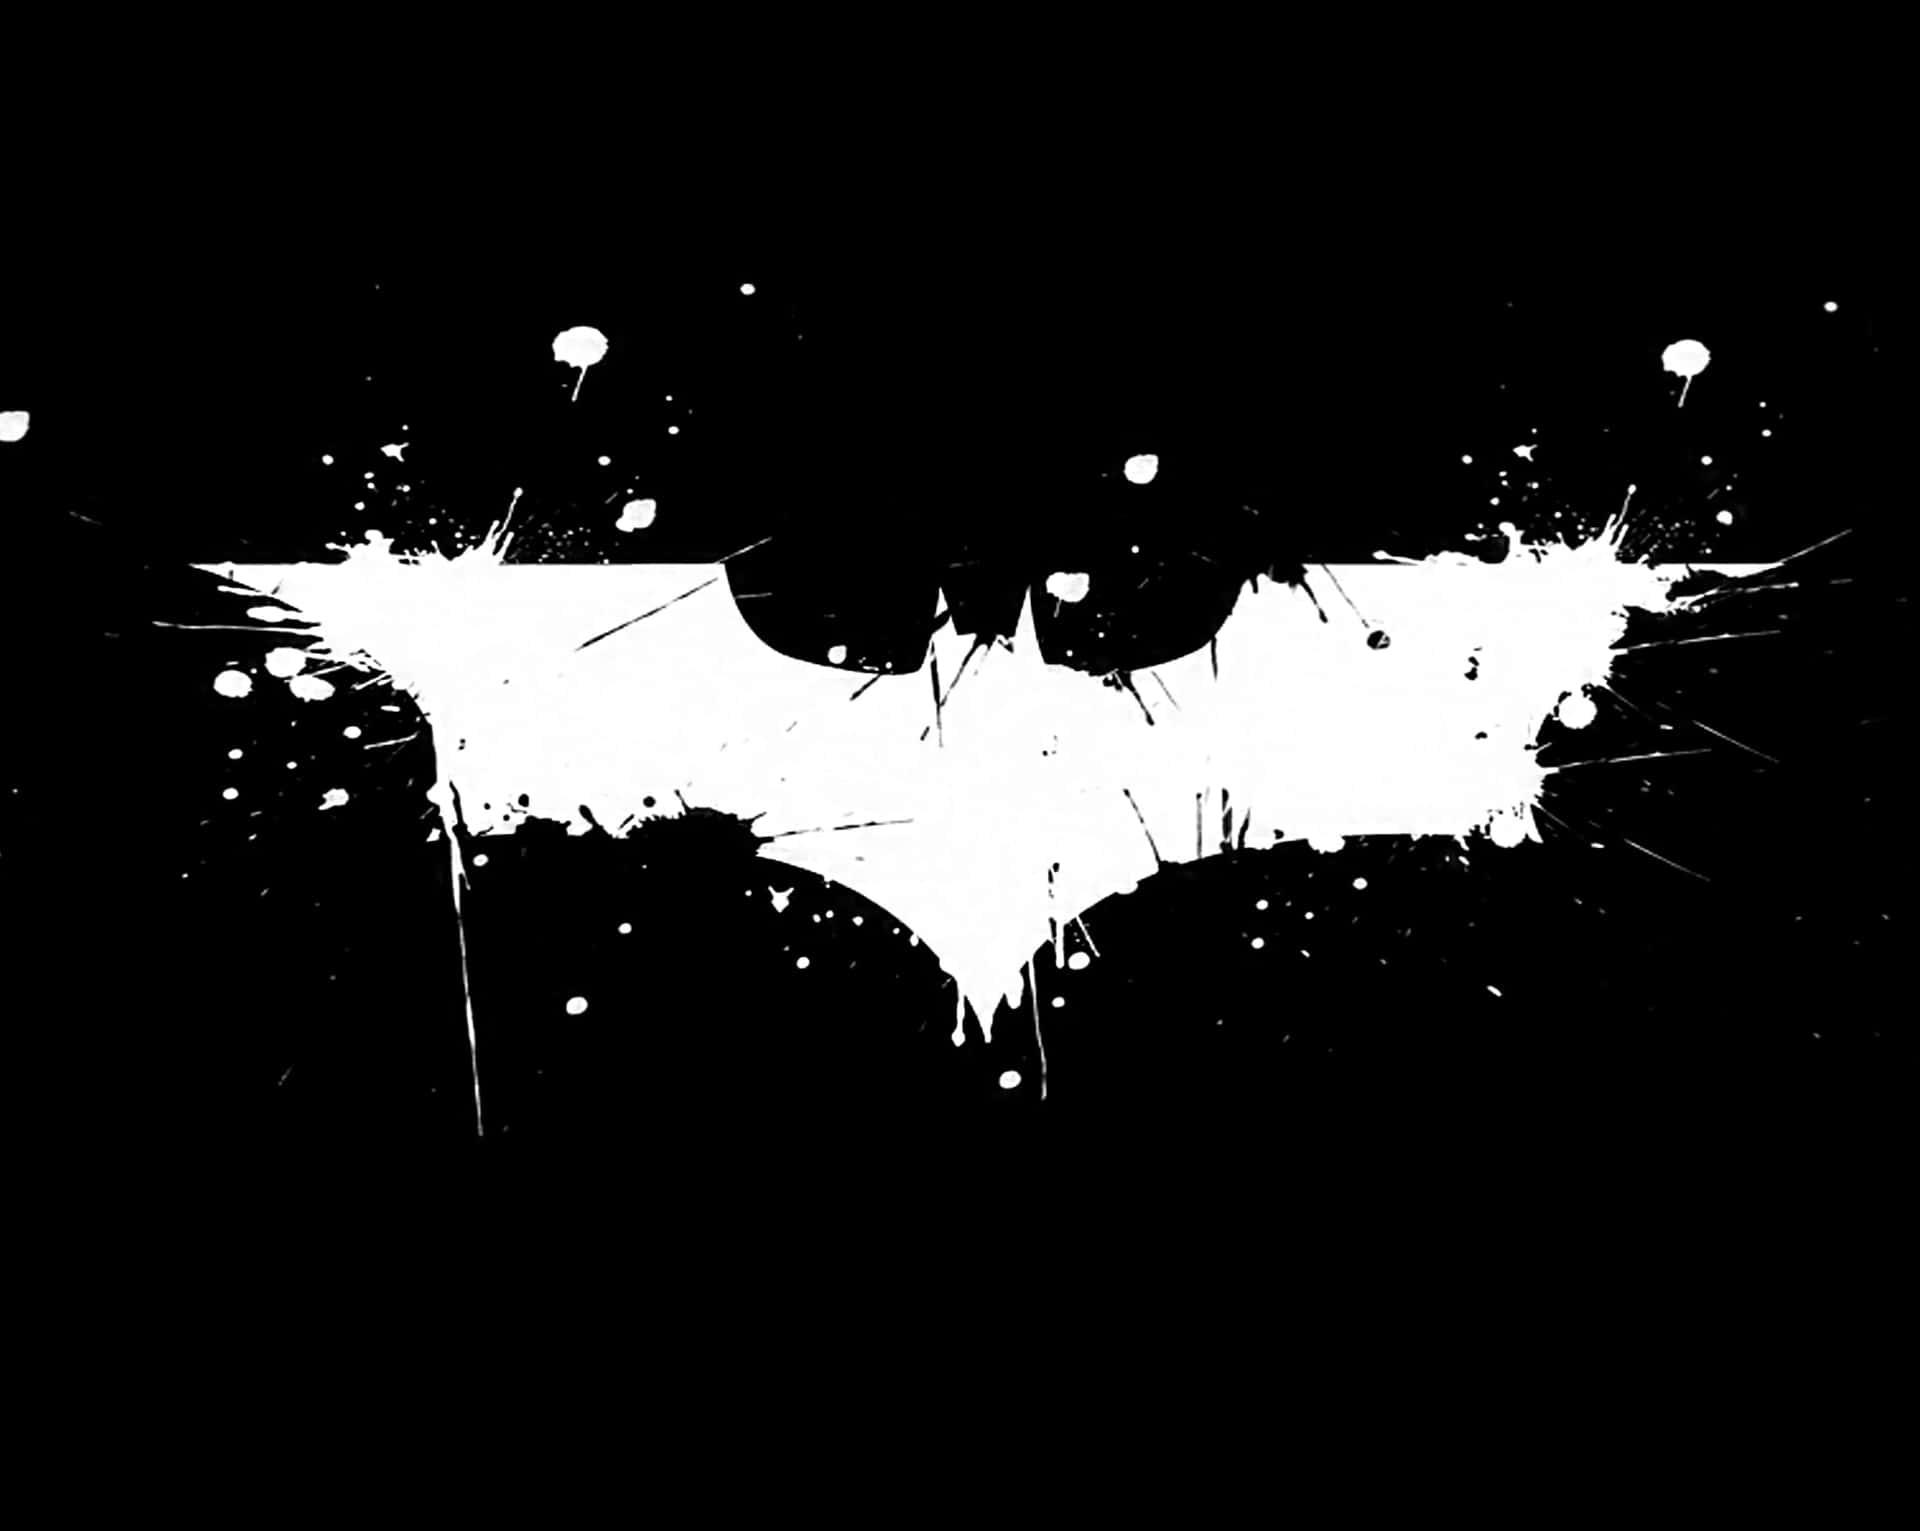 The Batman Background